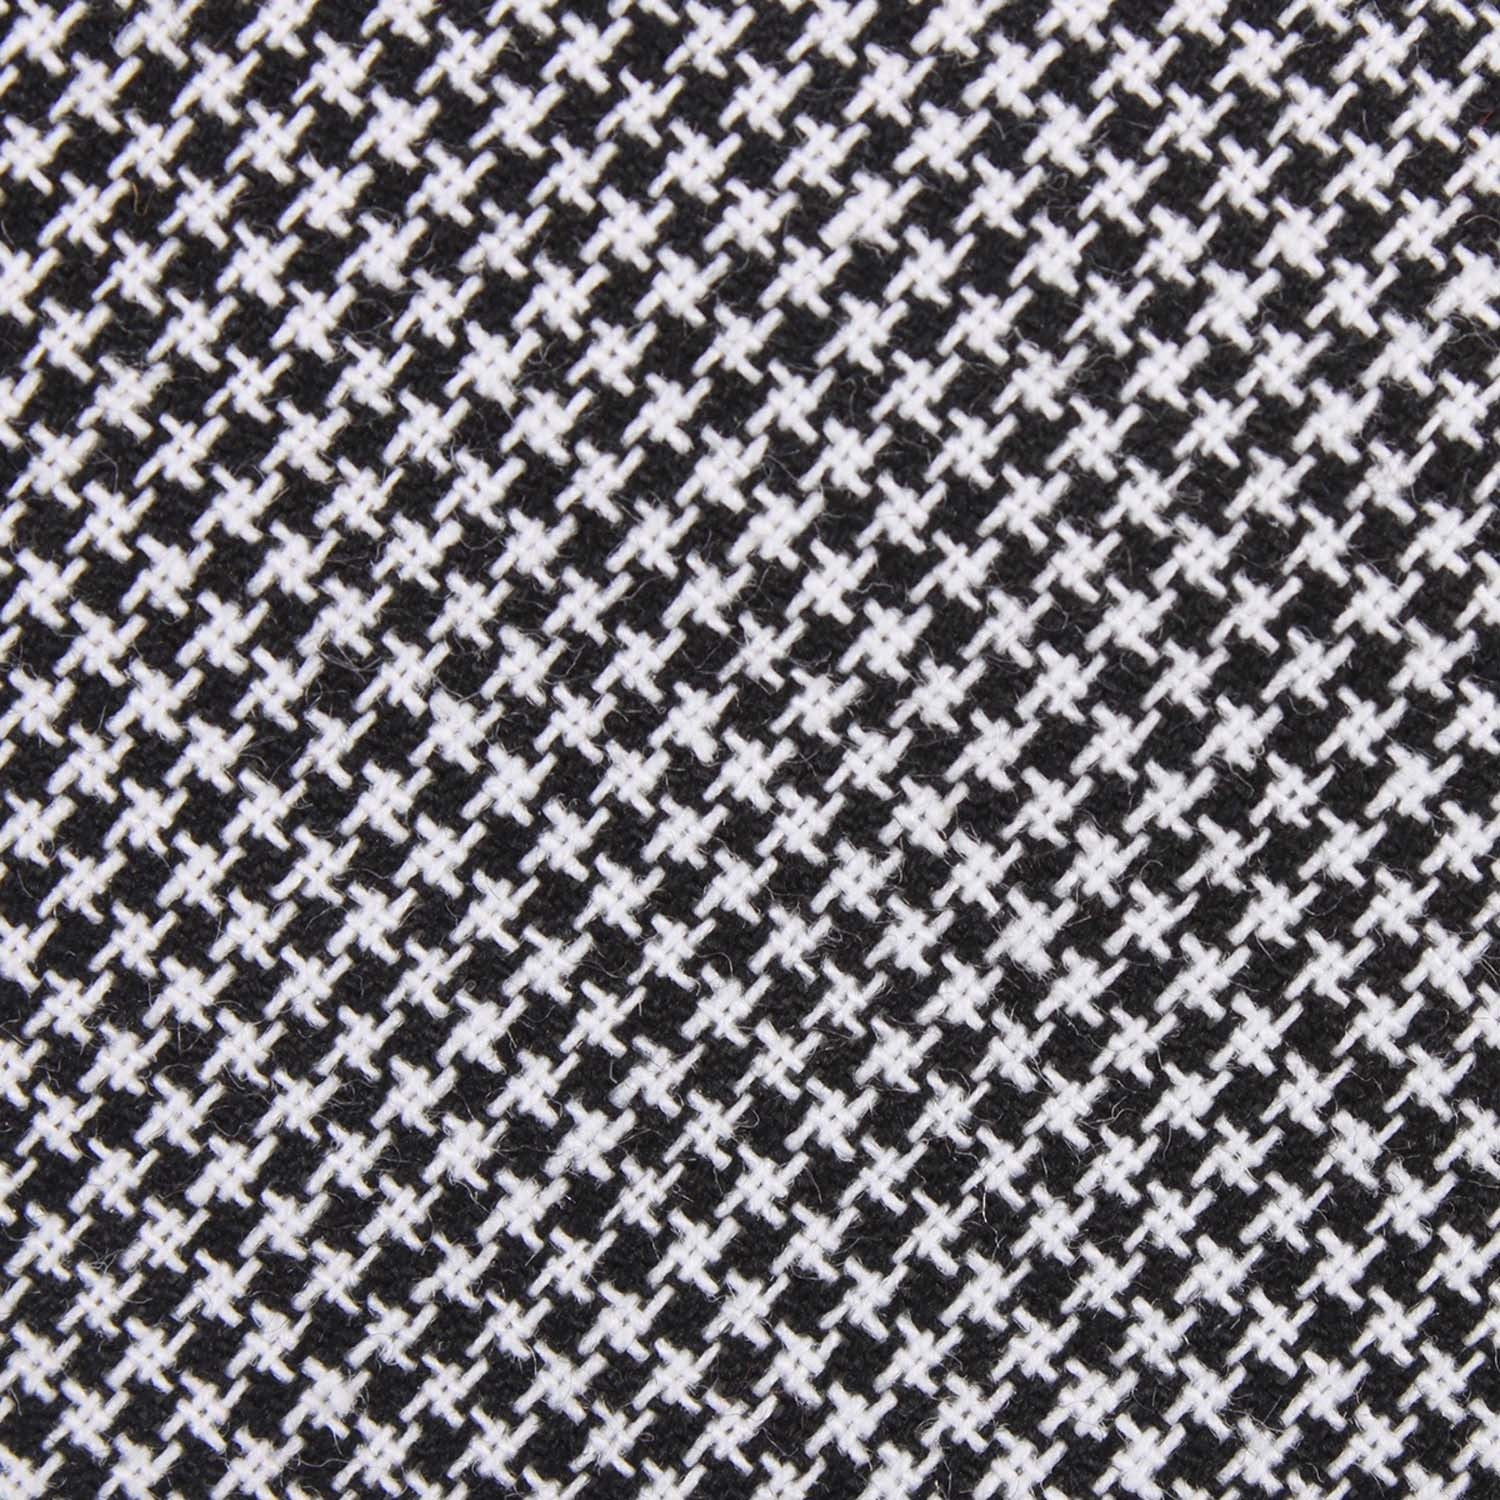 Black & White Houndstooth Cotton Fabric Self Tie Diamond Tip Bow TieC164